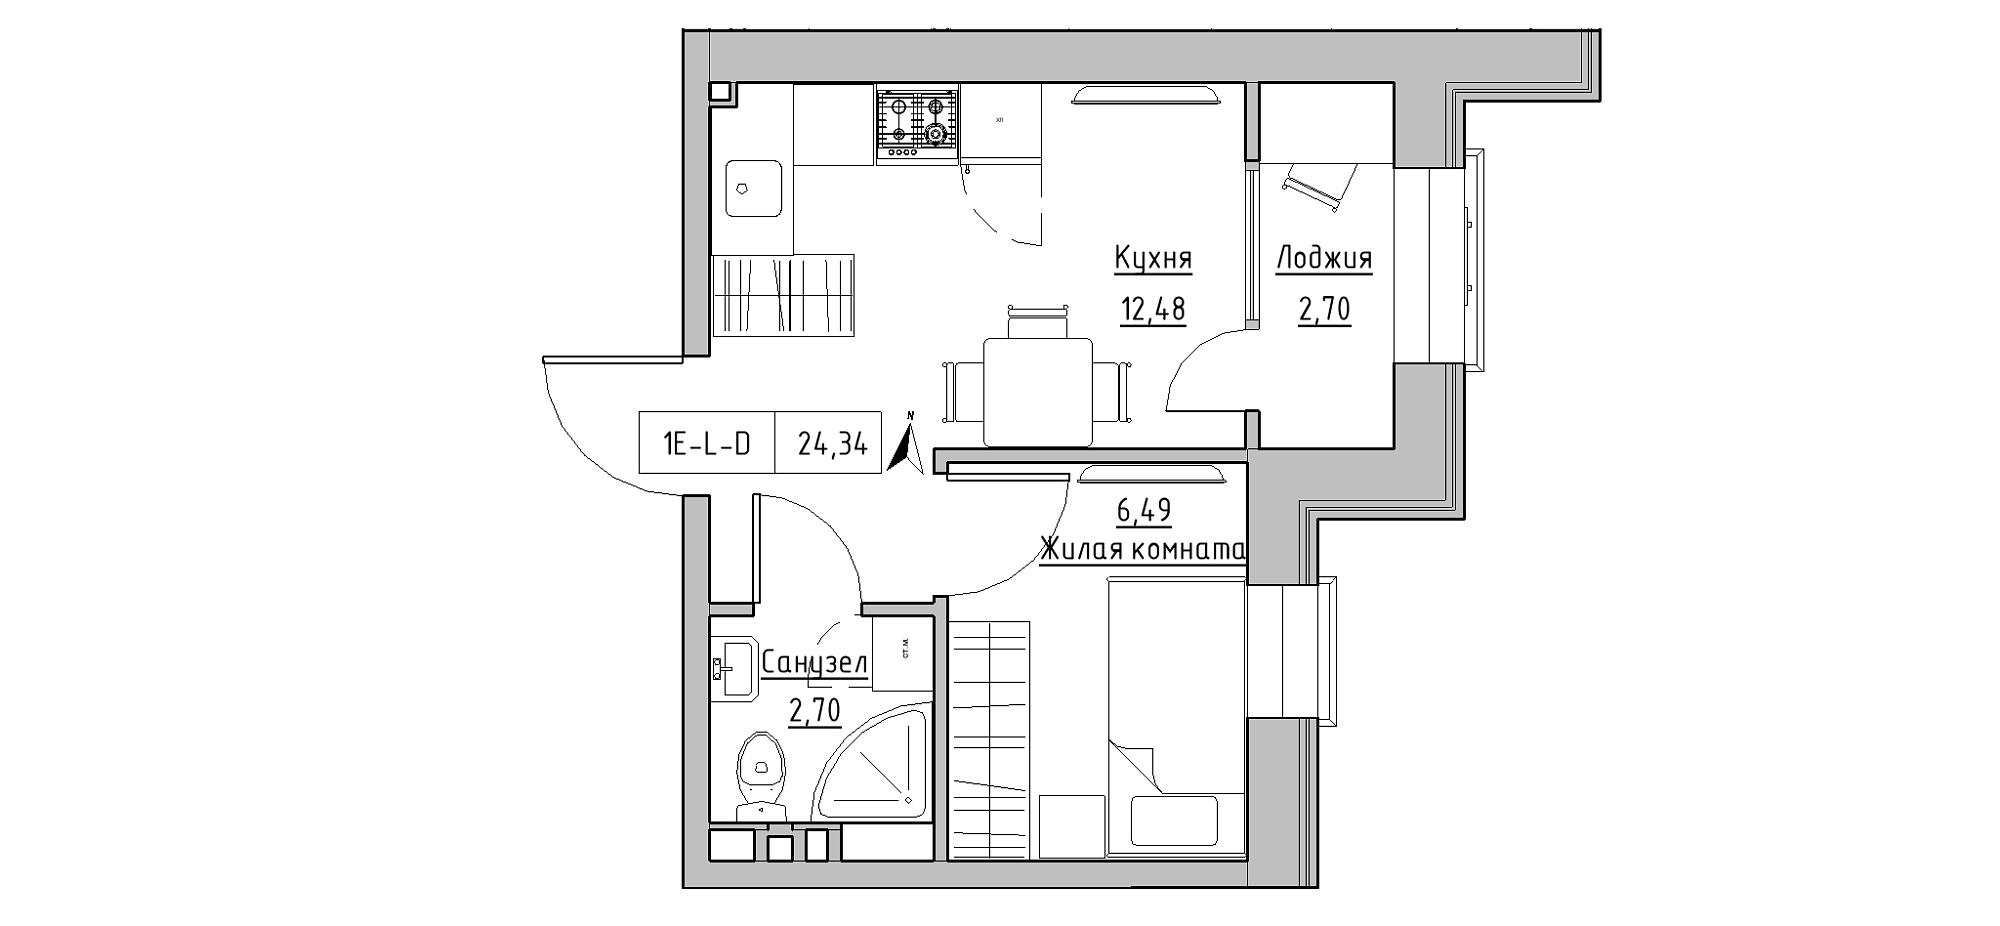 Planning 1-rm flats area 24.34m2, KS-020-01/0015.